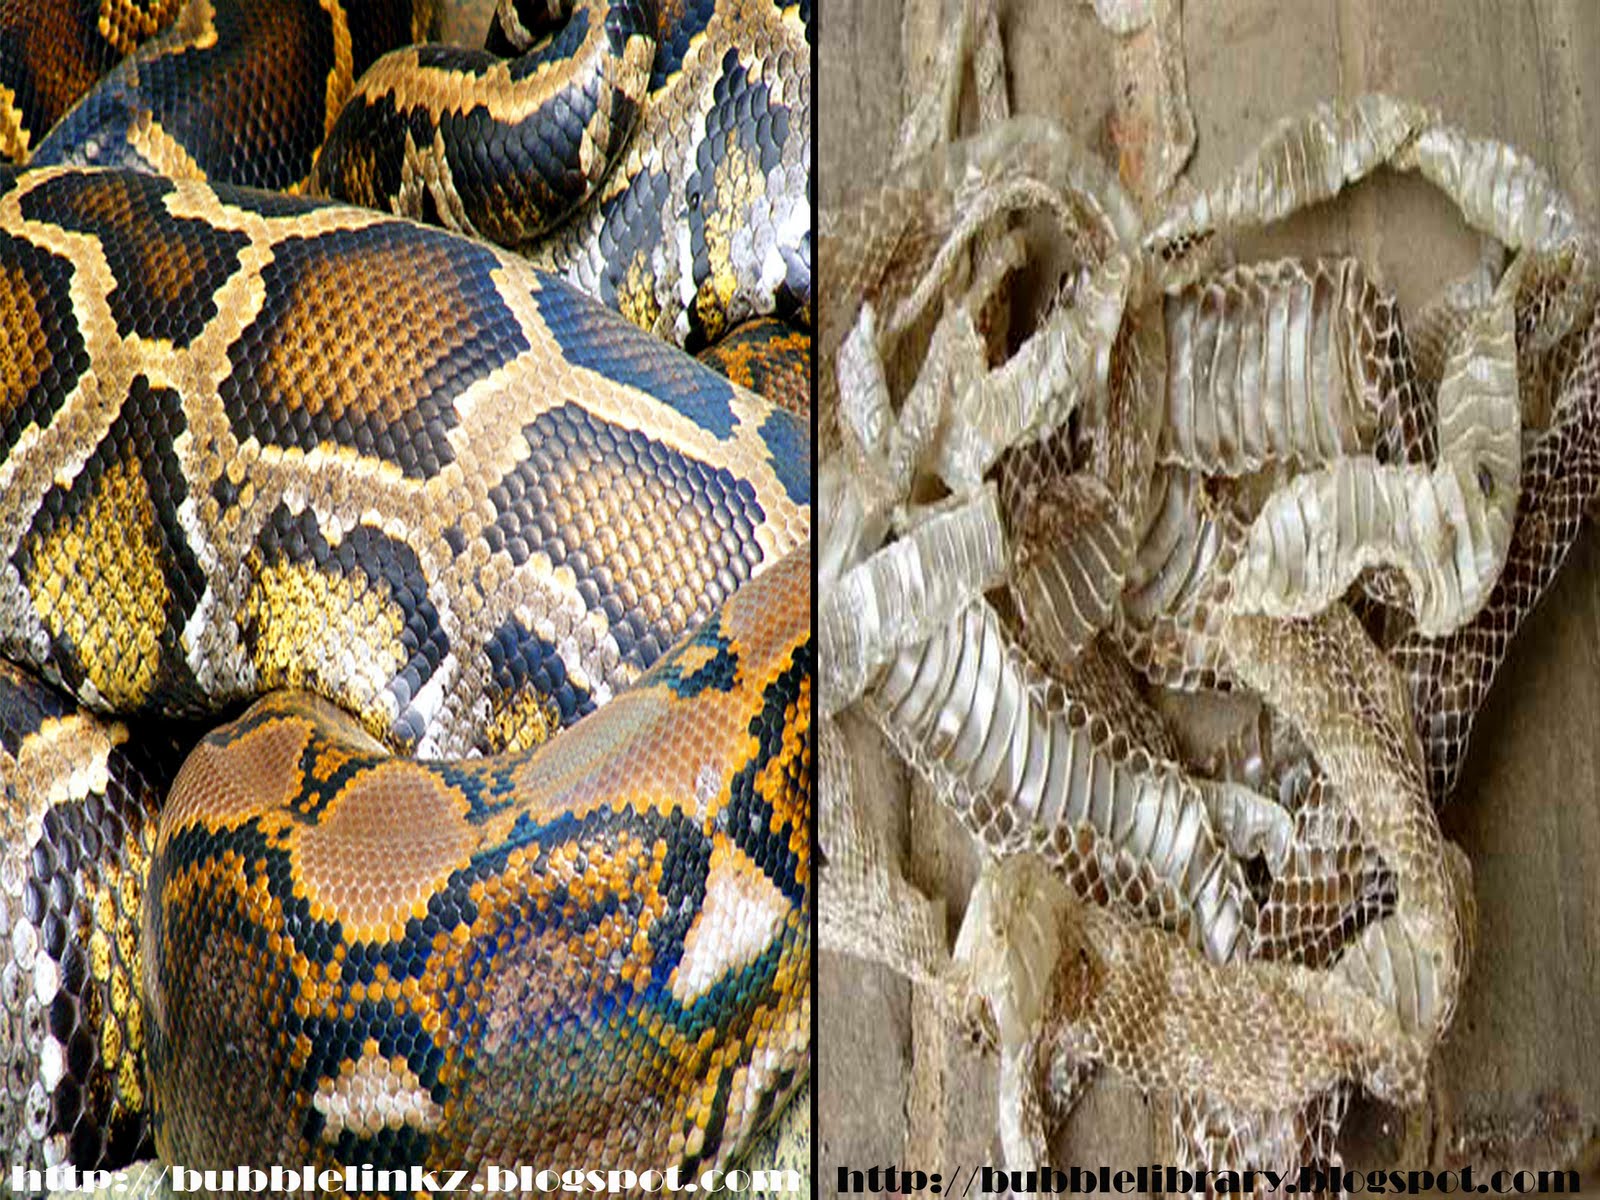 b u b b l e l i b r a r y: when do snakes shed their skins?